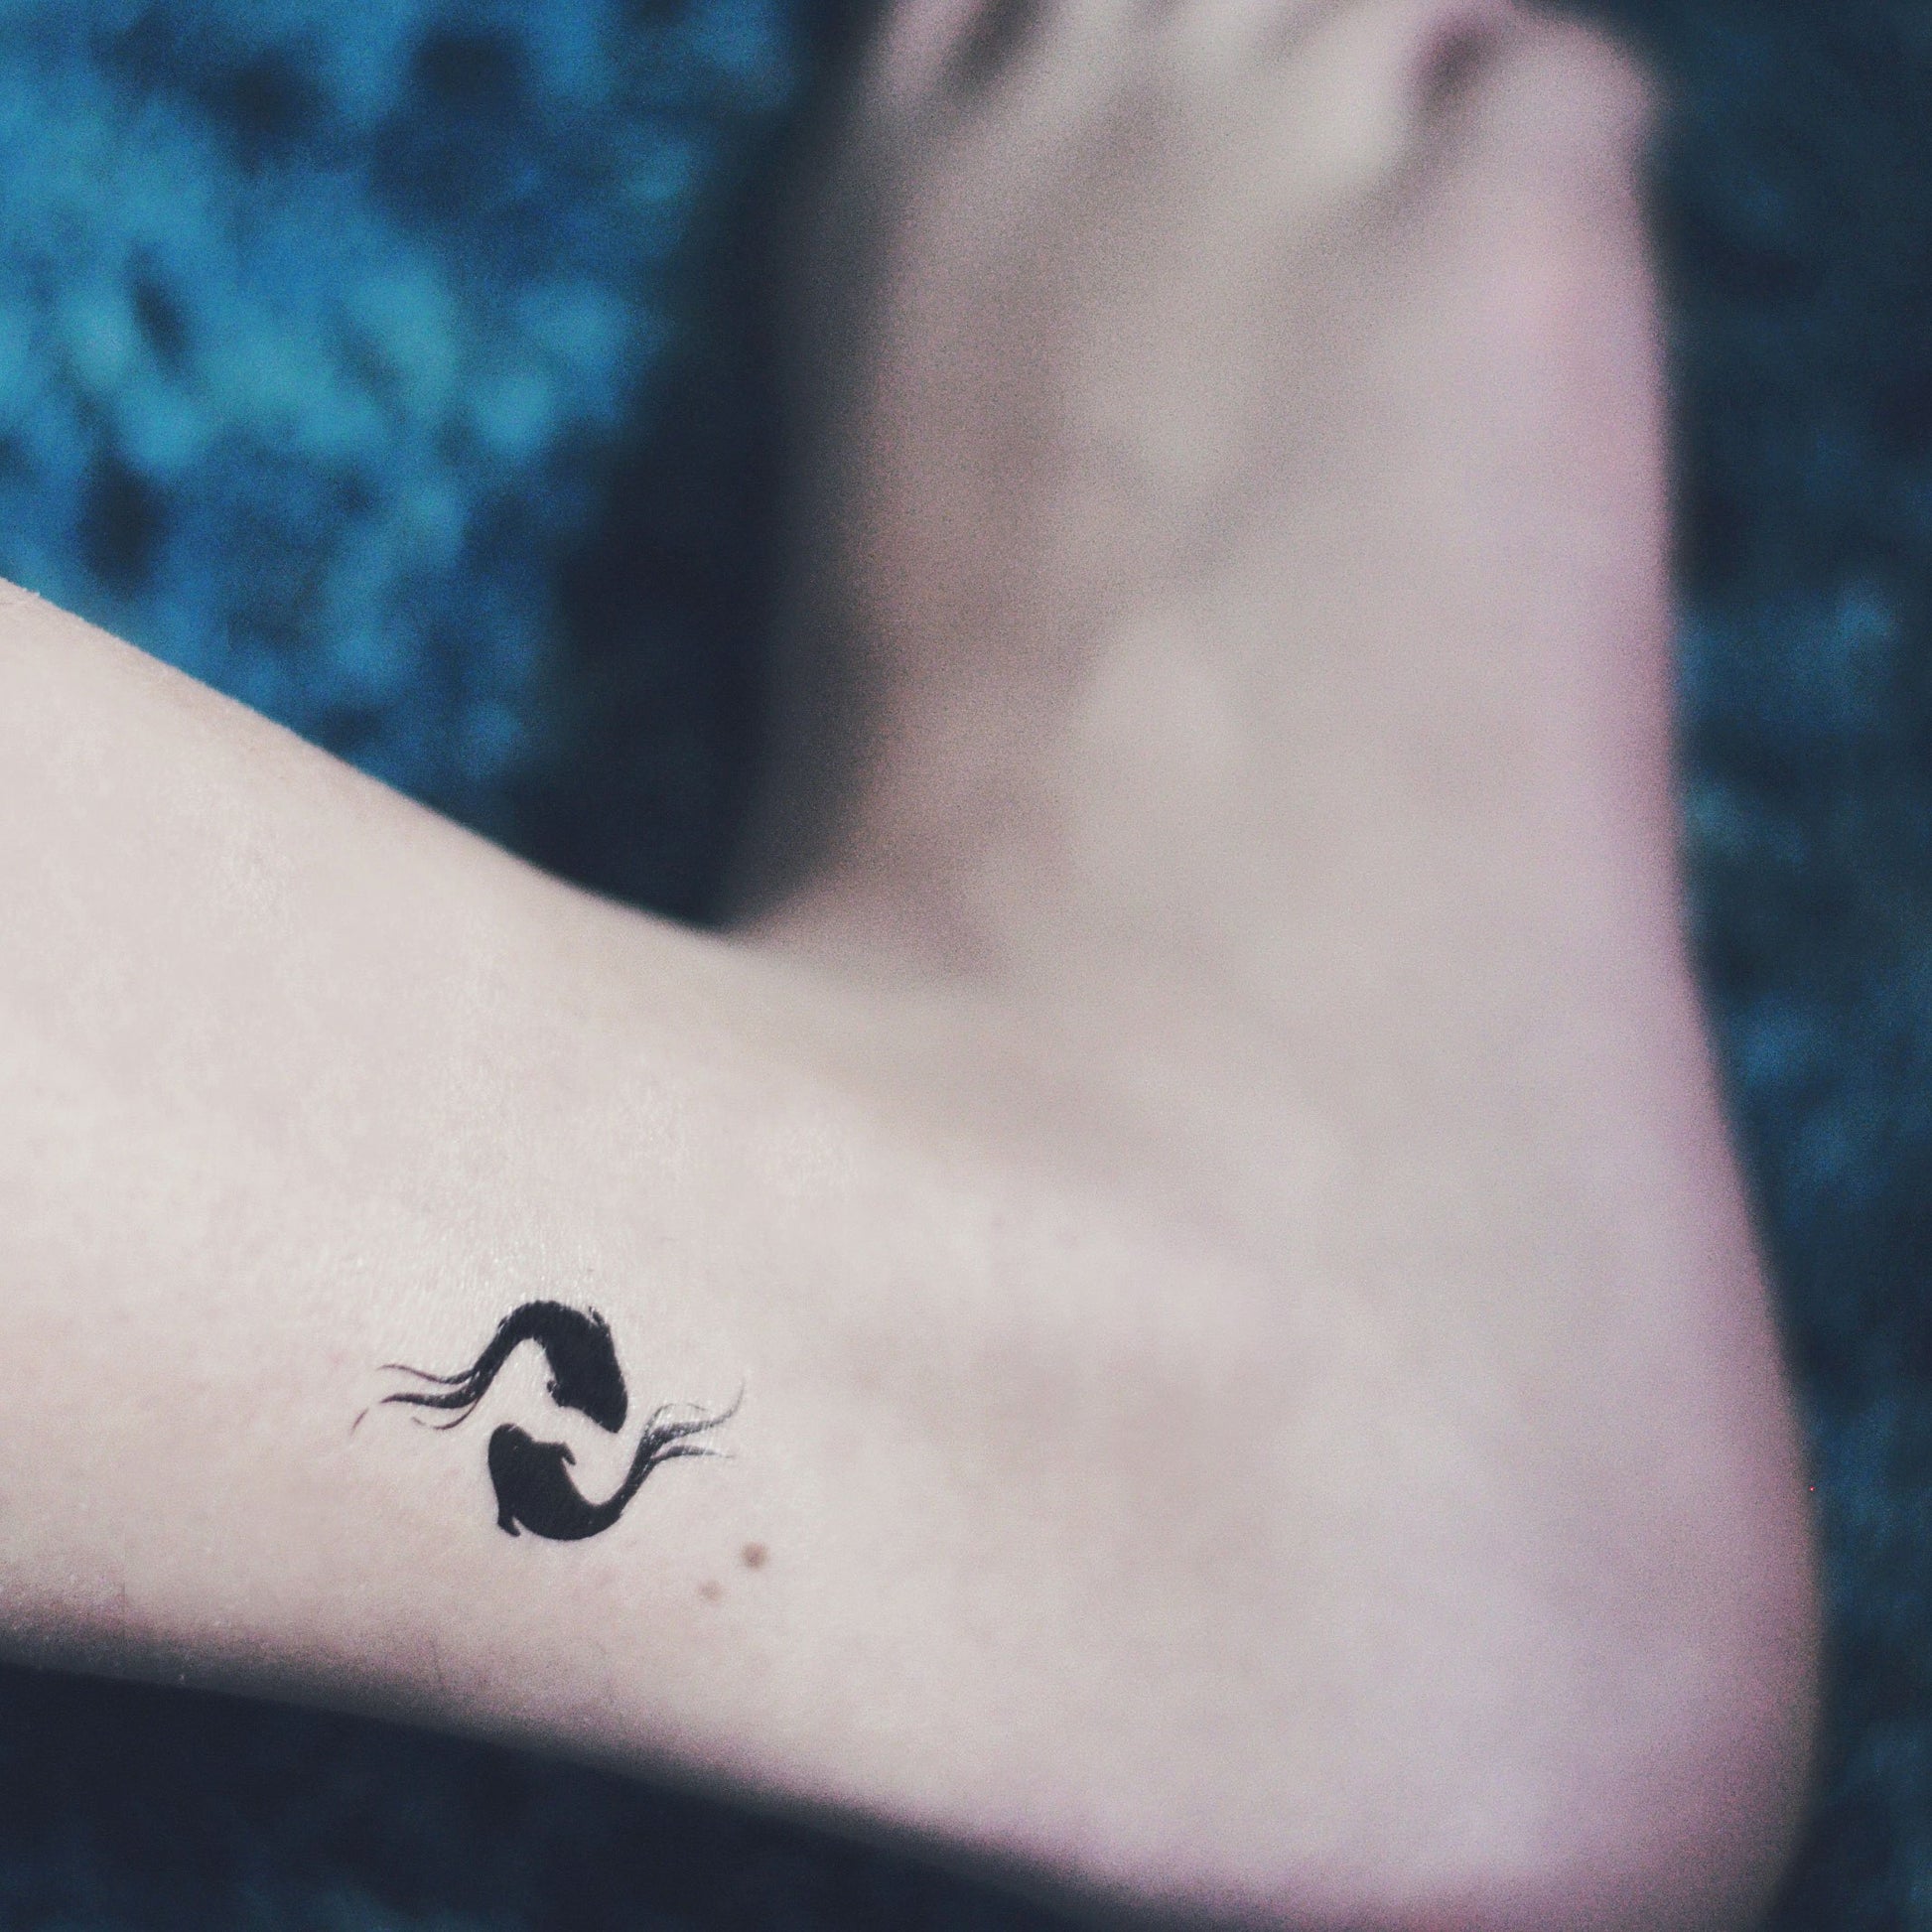 fake small goldfish pair pisces yin yang koi fish zodiac sign animal temporary tattoo sticker design idea on ankle